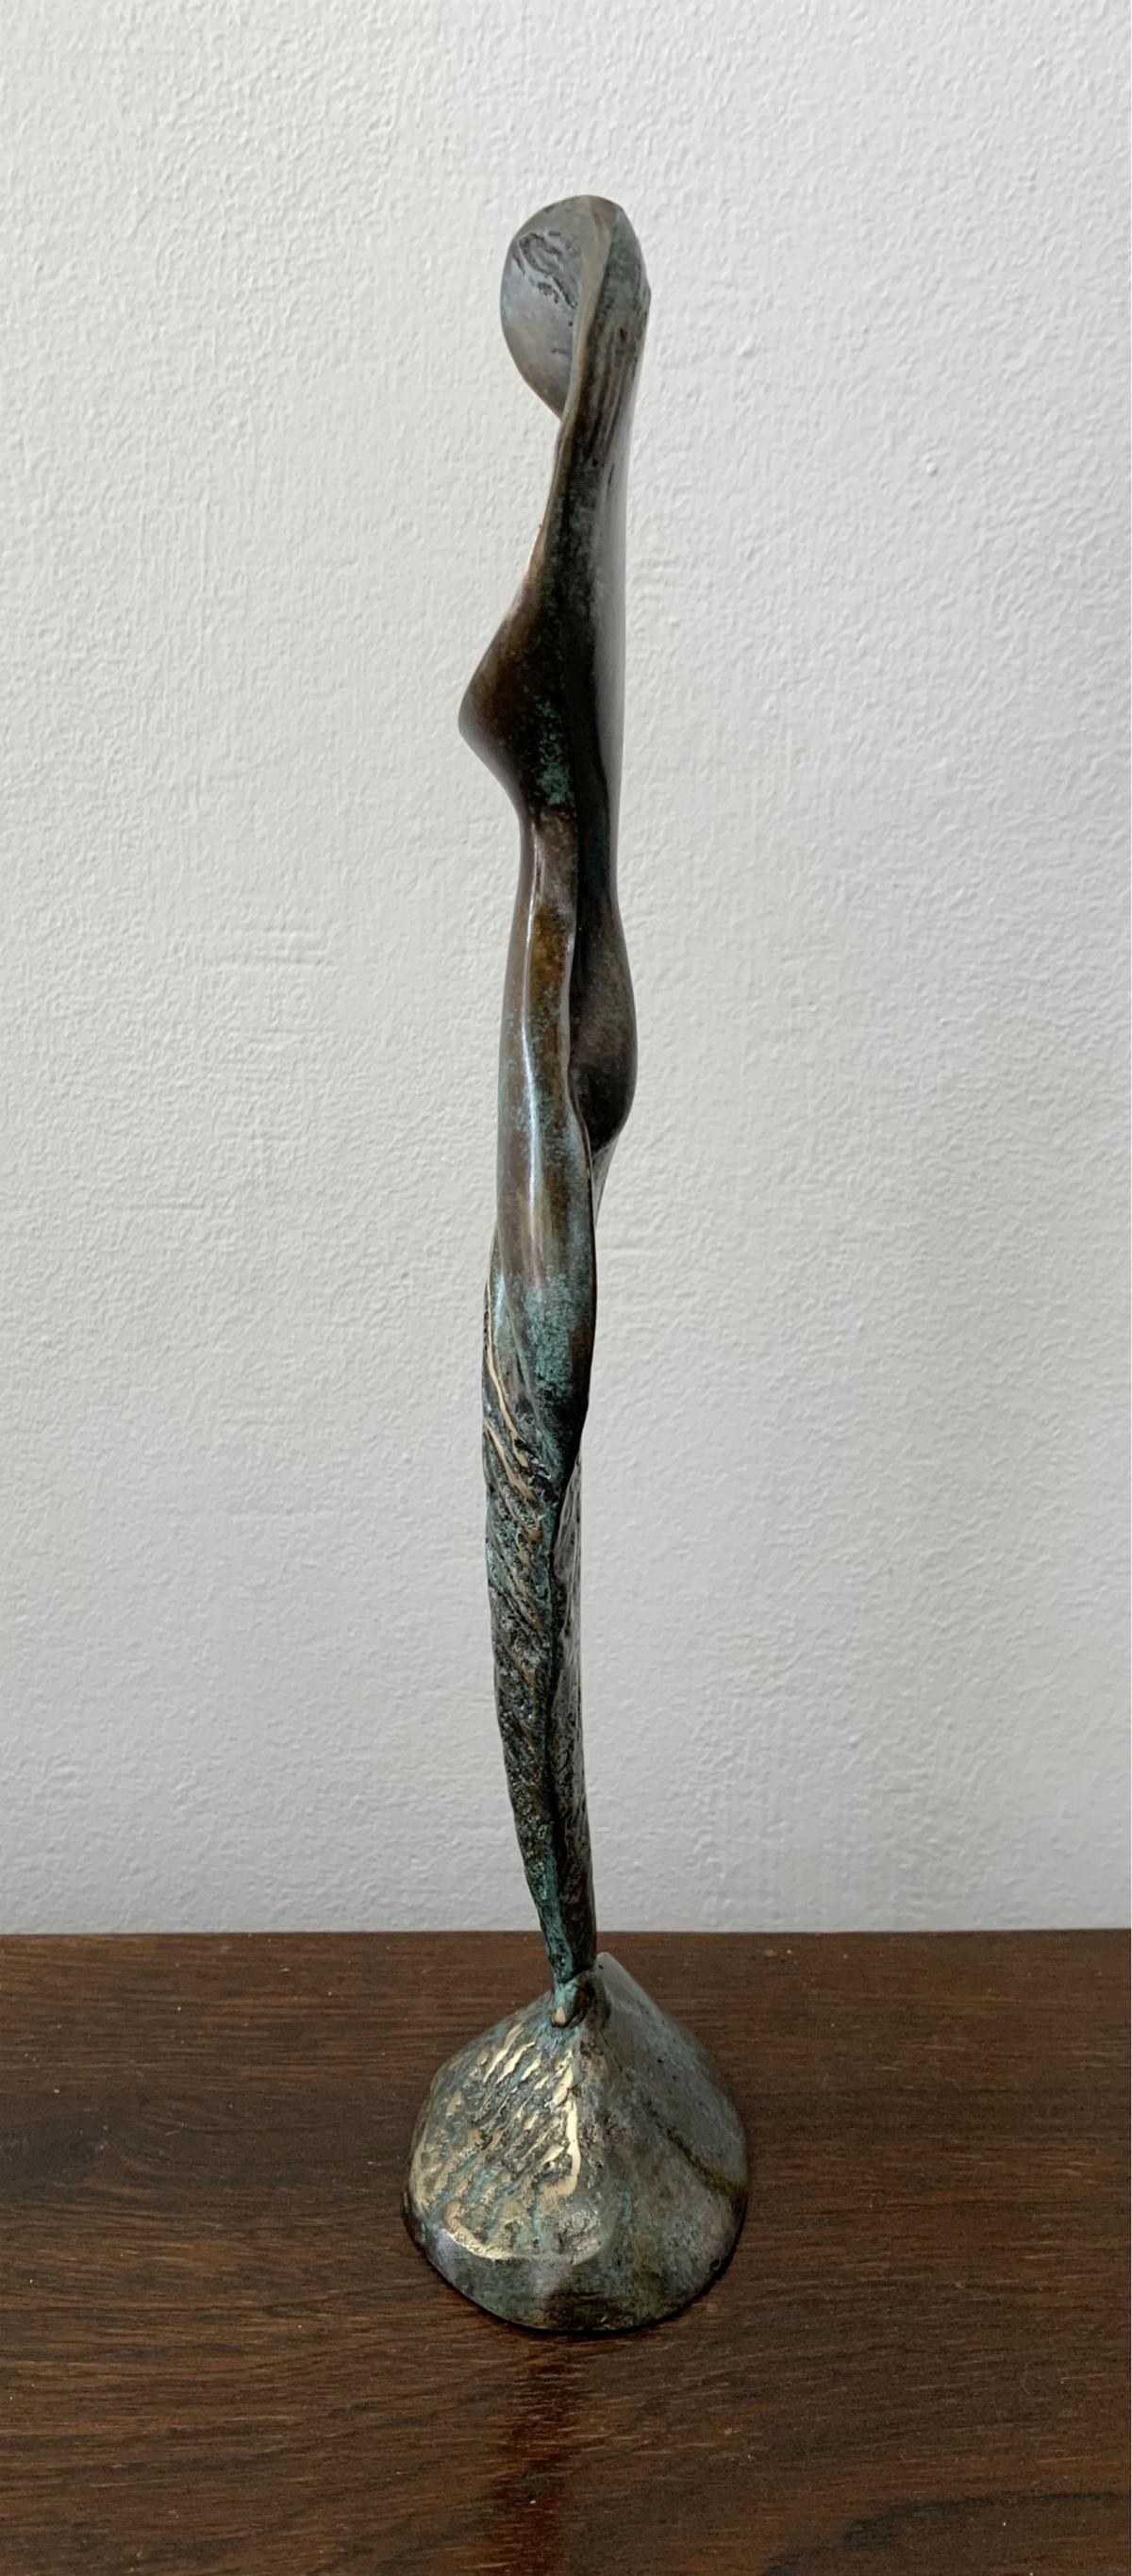 Nude - XXI century Contemporary bronze sculpture, Abstract & figurative - Sculpture by Stanisław Wysocki